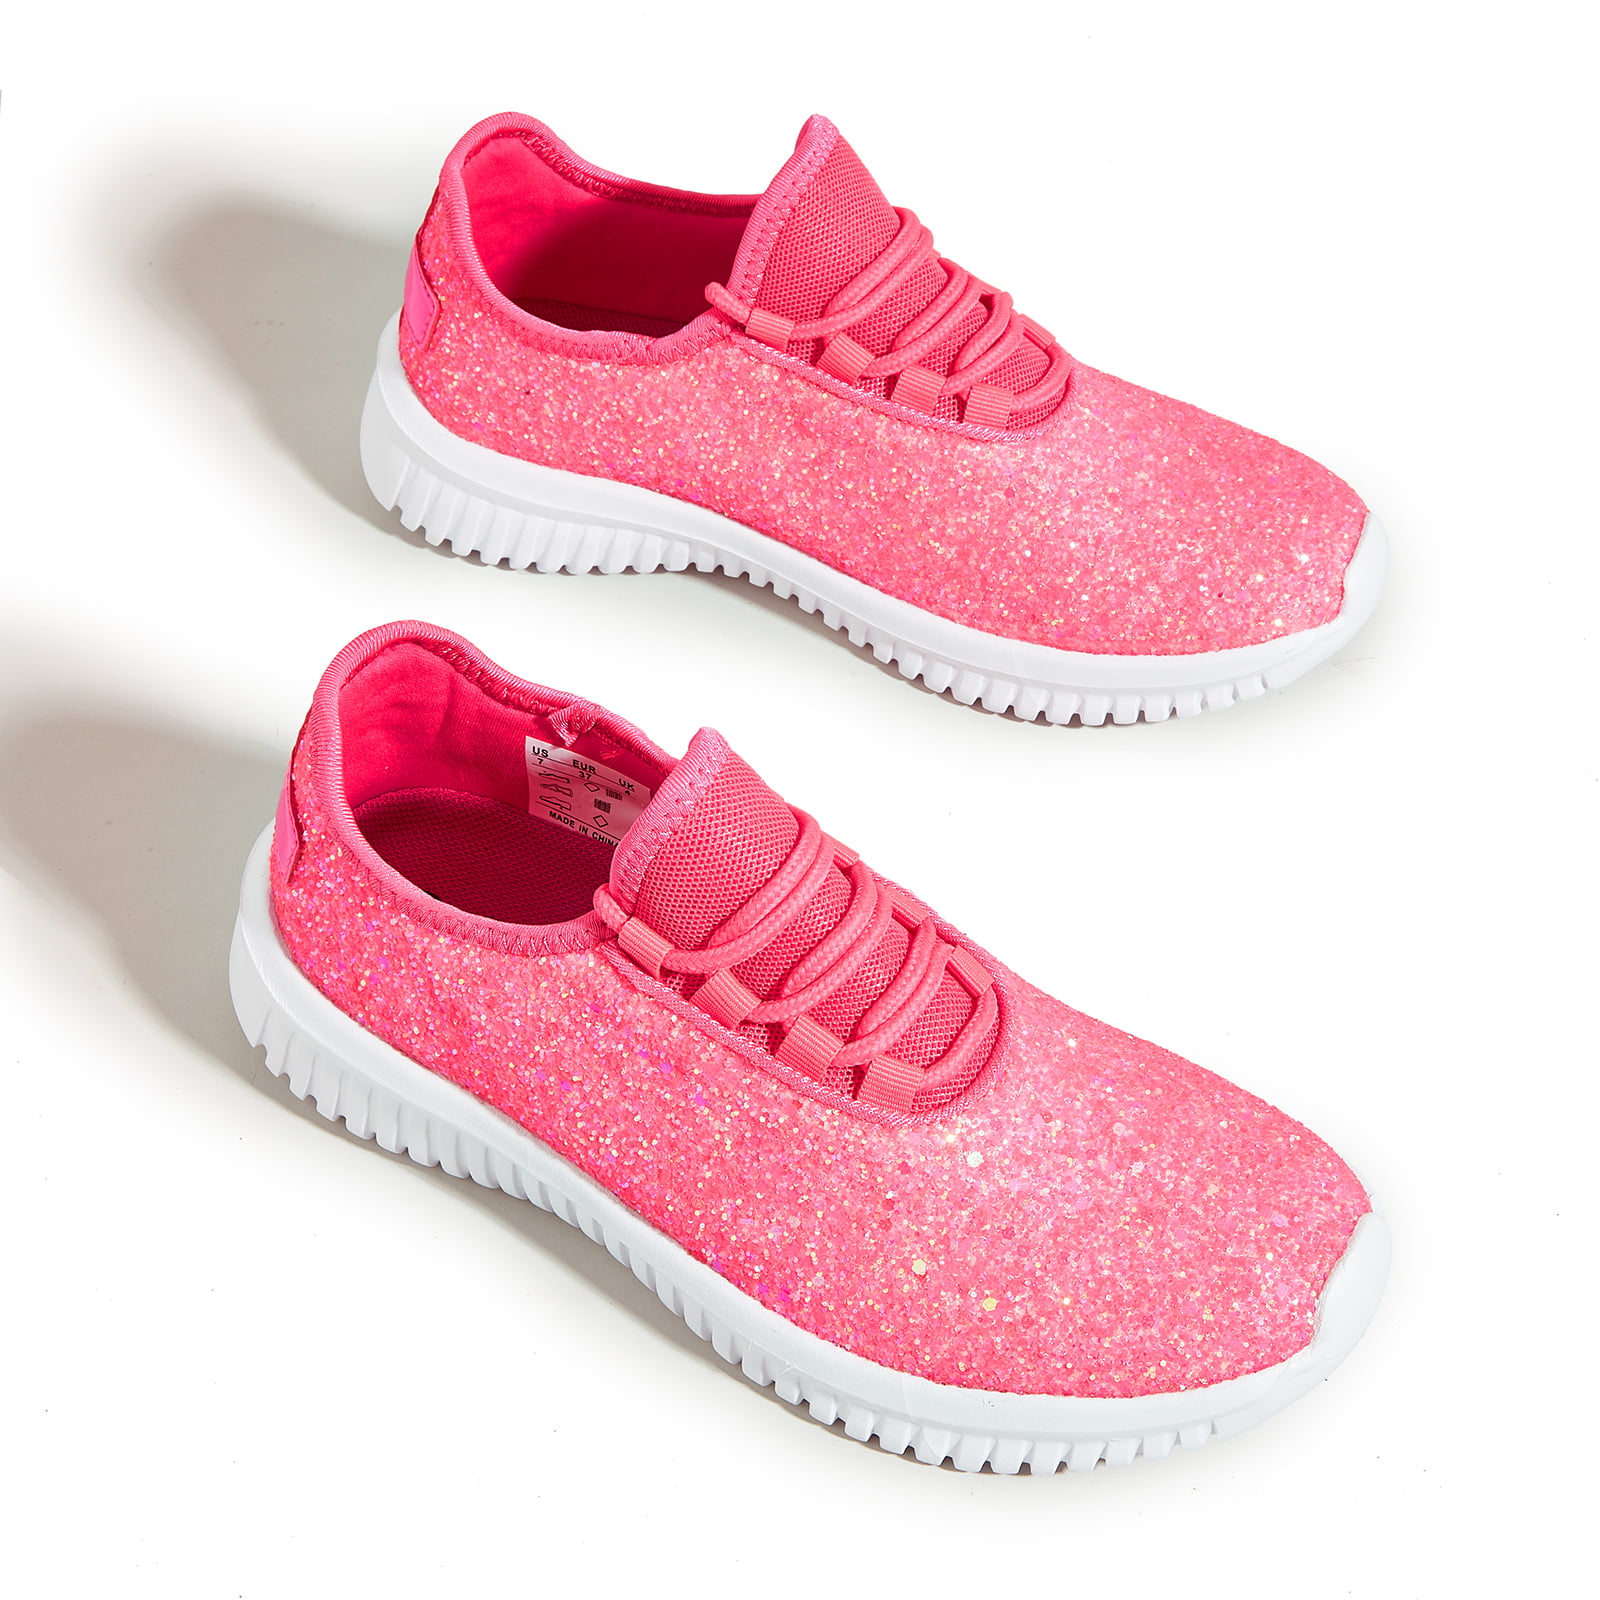 K Kip Wok Fashion Glitter Sneakers for Womens Silp on Running Shoes Lightweigt Tennis Walking Sneakers